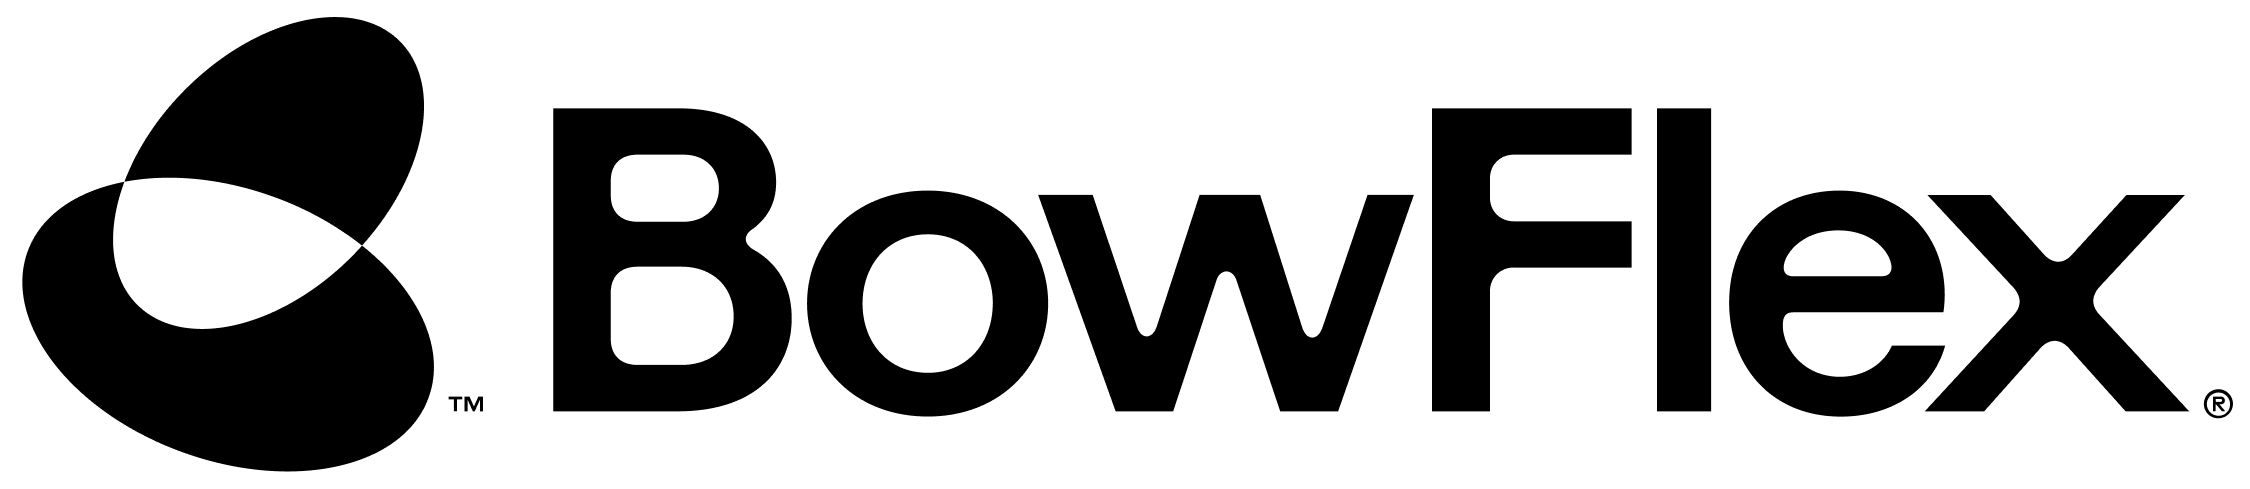 BowFlex_Logo-Mark_Black